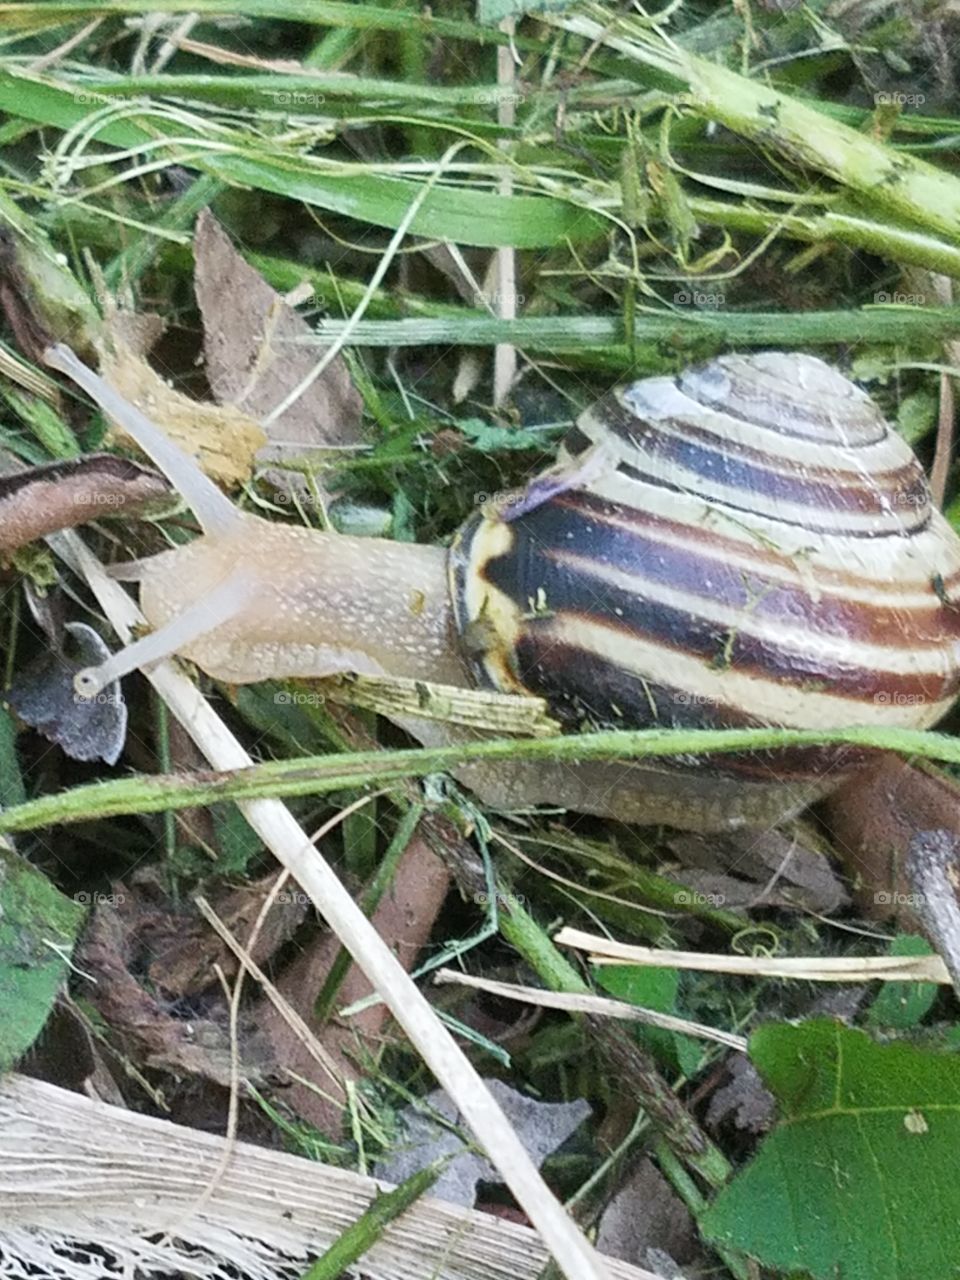 spring snailing